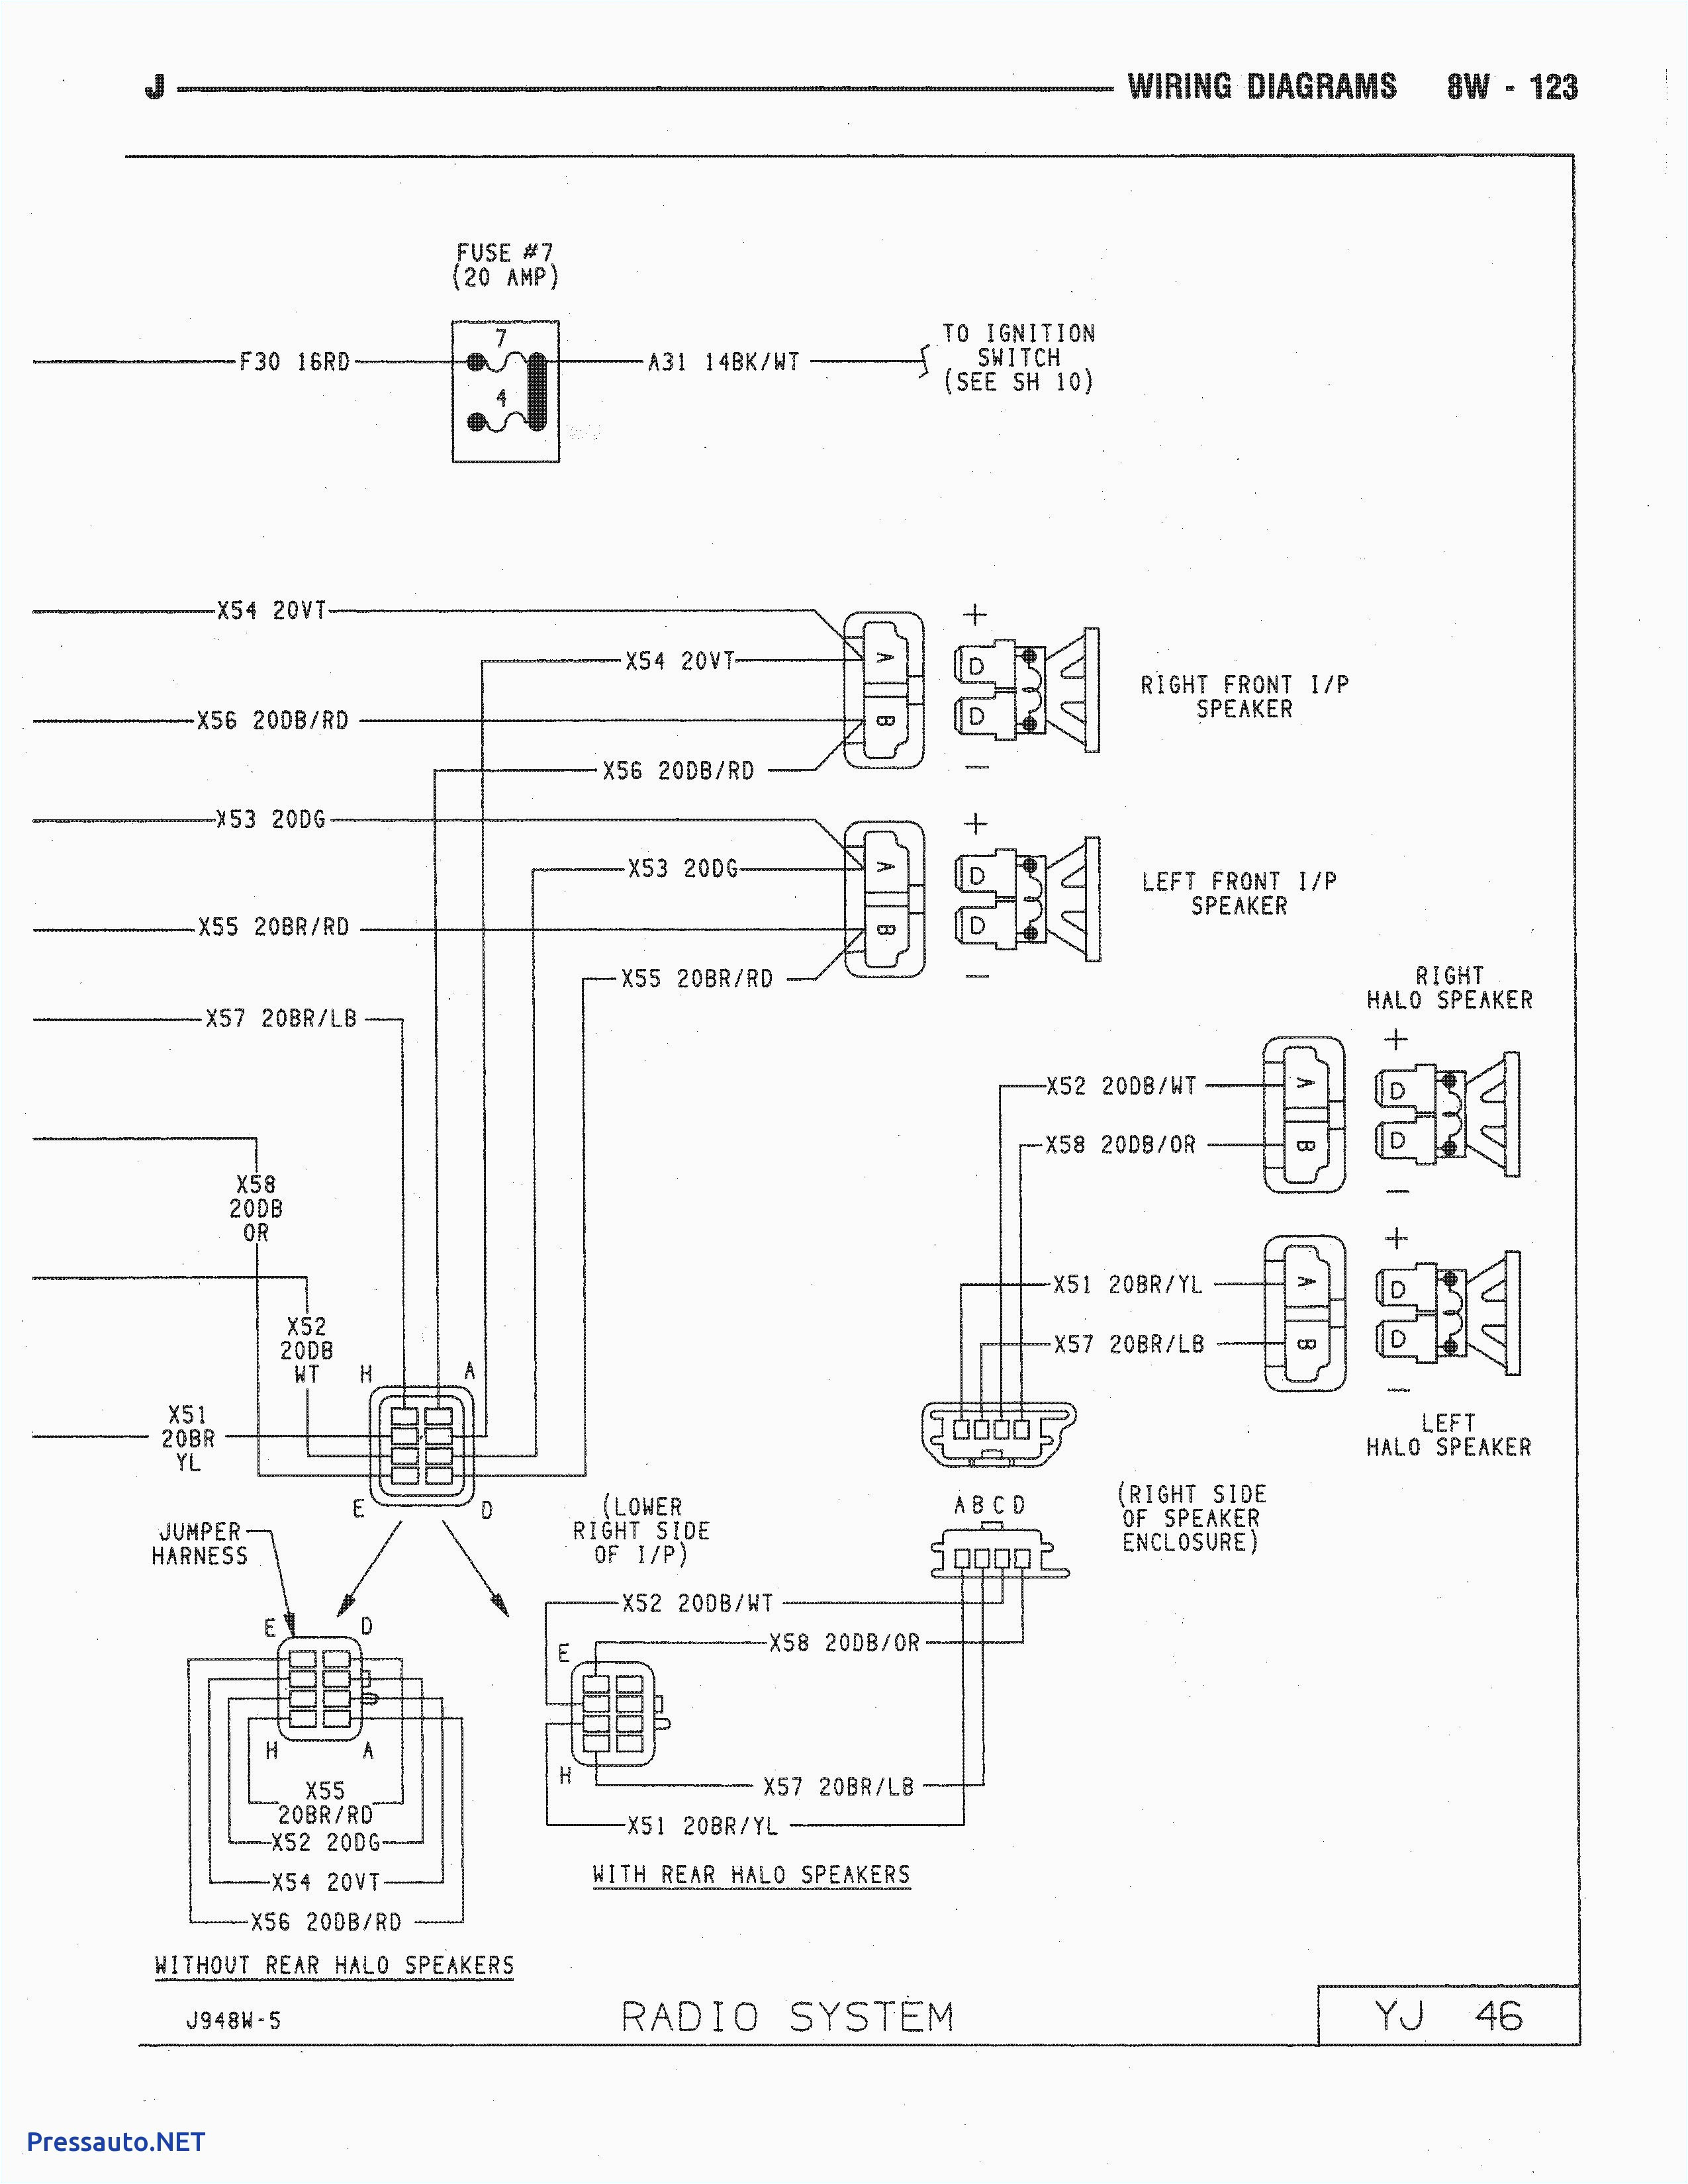 crazy wiring diagram wiring diagram crazy wiring jeep